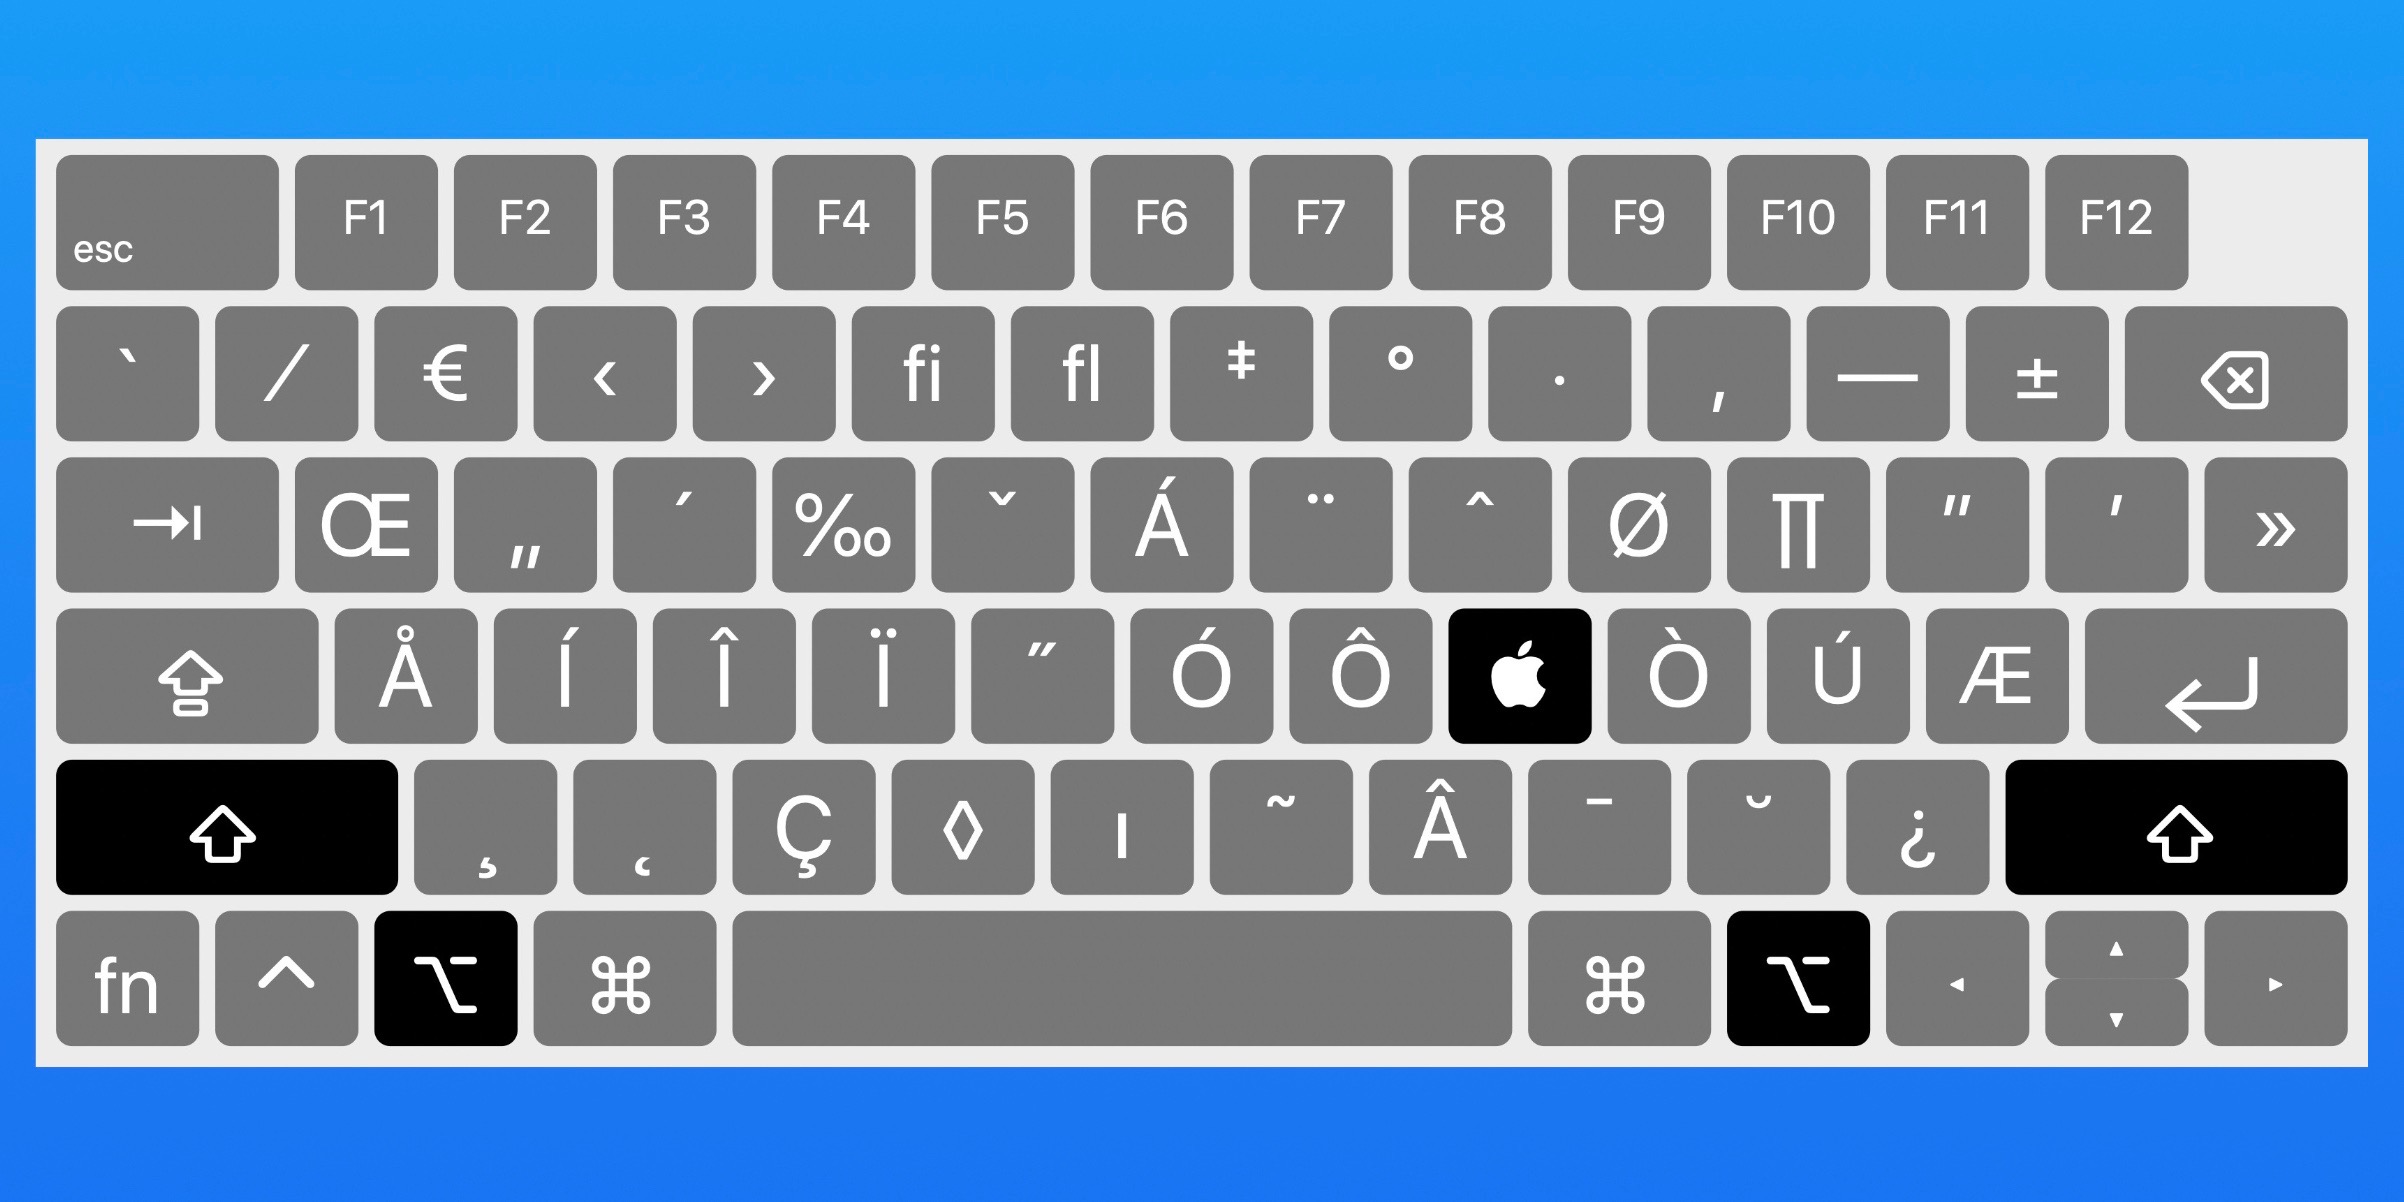 macbook emoji keyboard shortcut